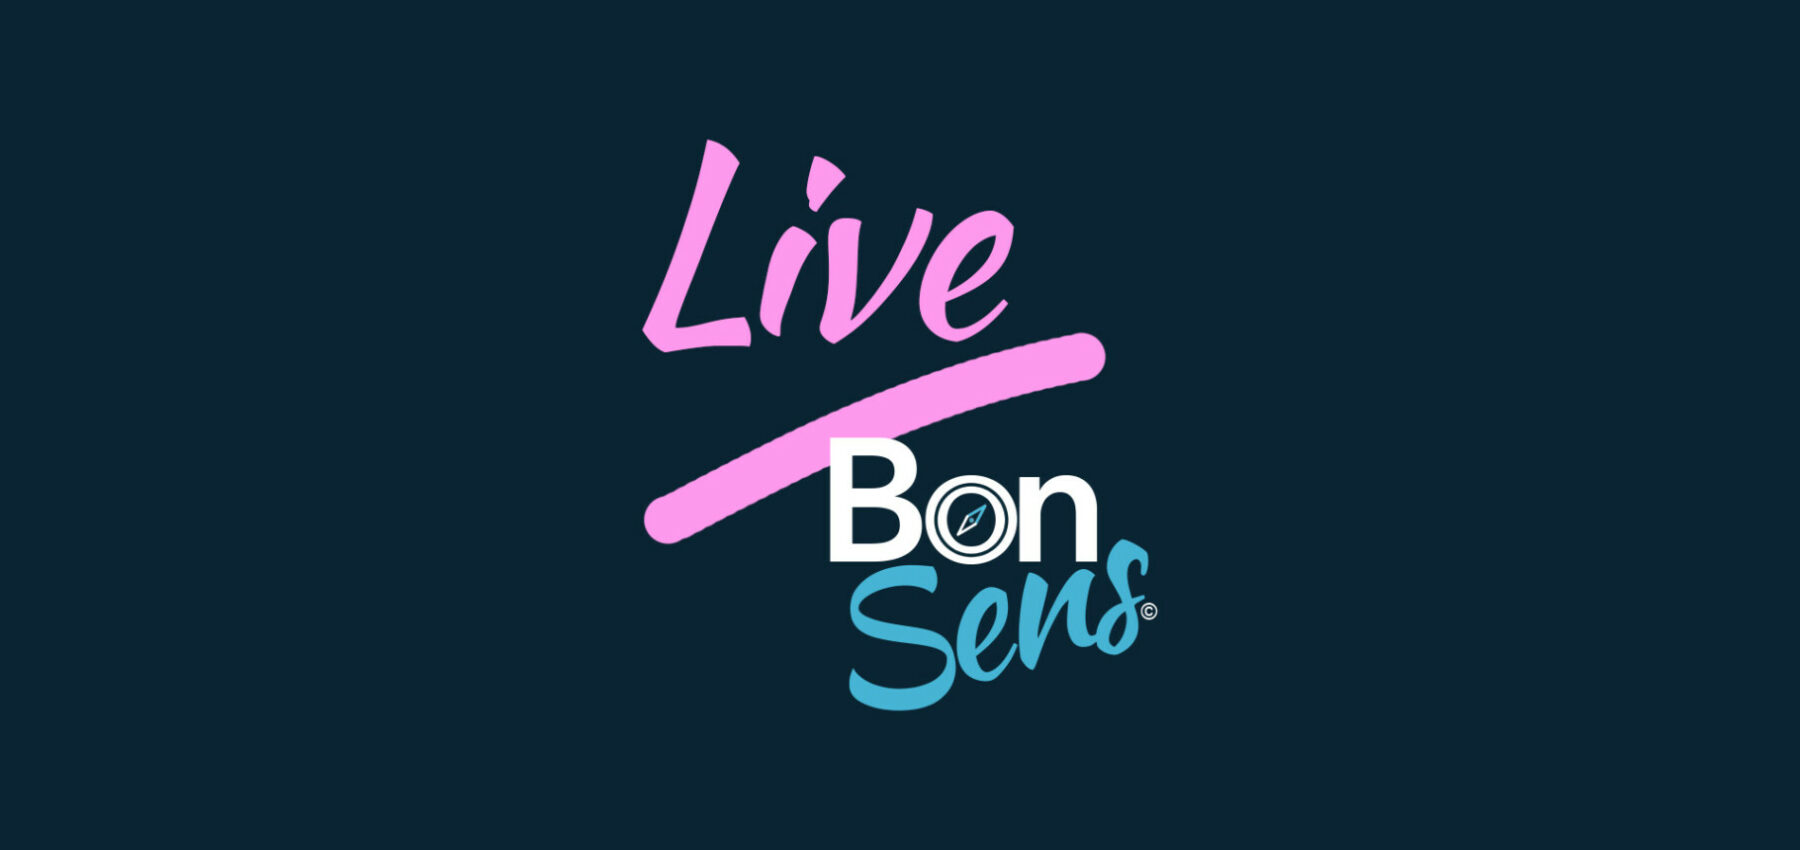 Live Bonsens.org tous les mois